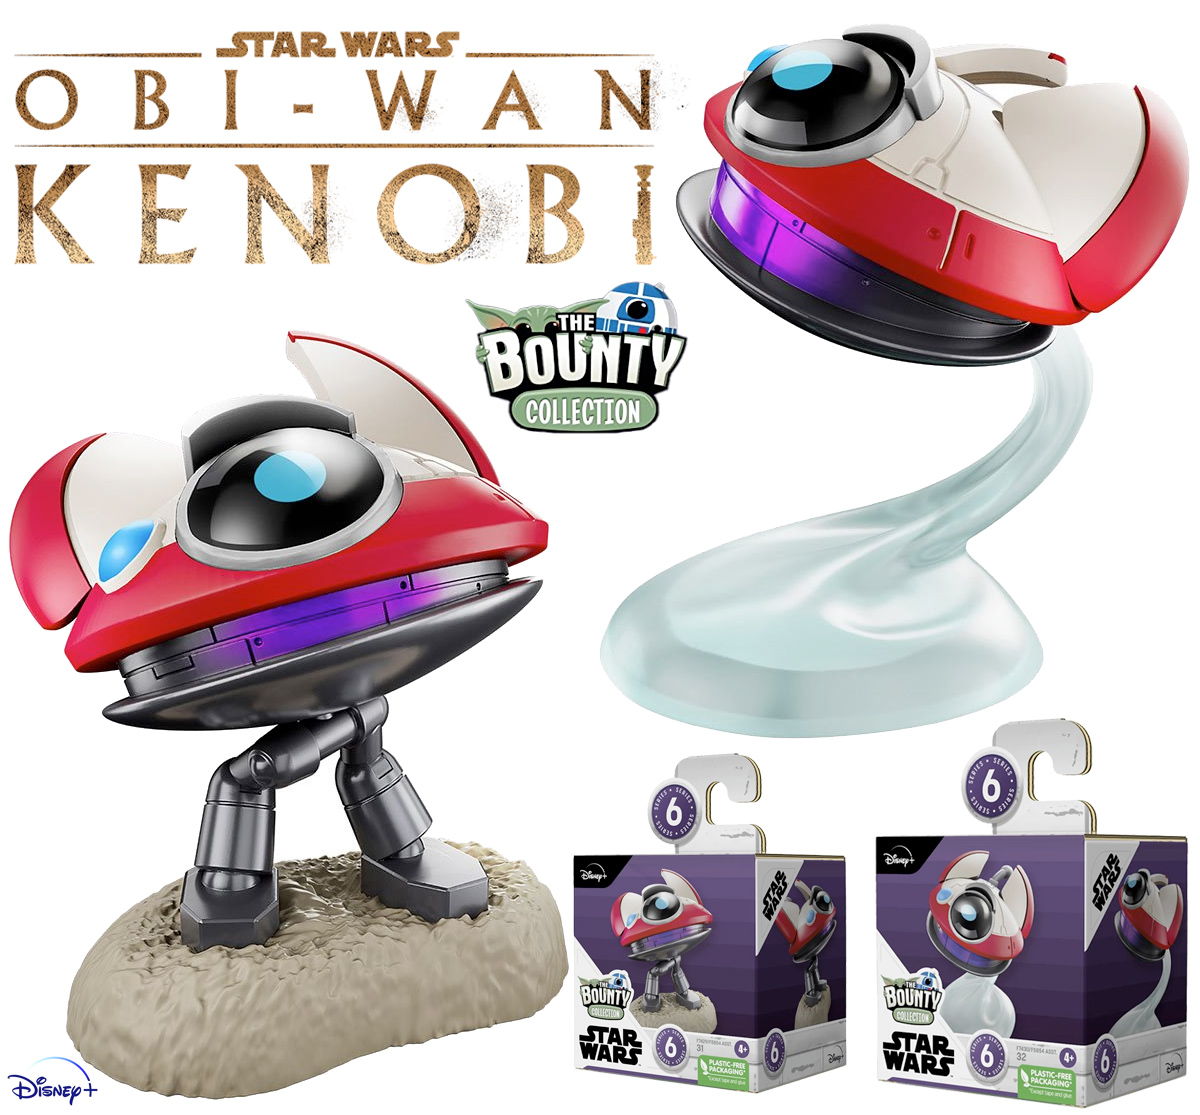 Mini-Figuras L0-LA59 Bounty Collection da Série Obi-Wan Kenobi (Disney+) class=